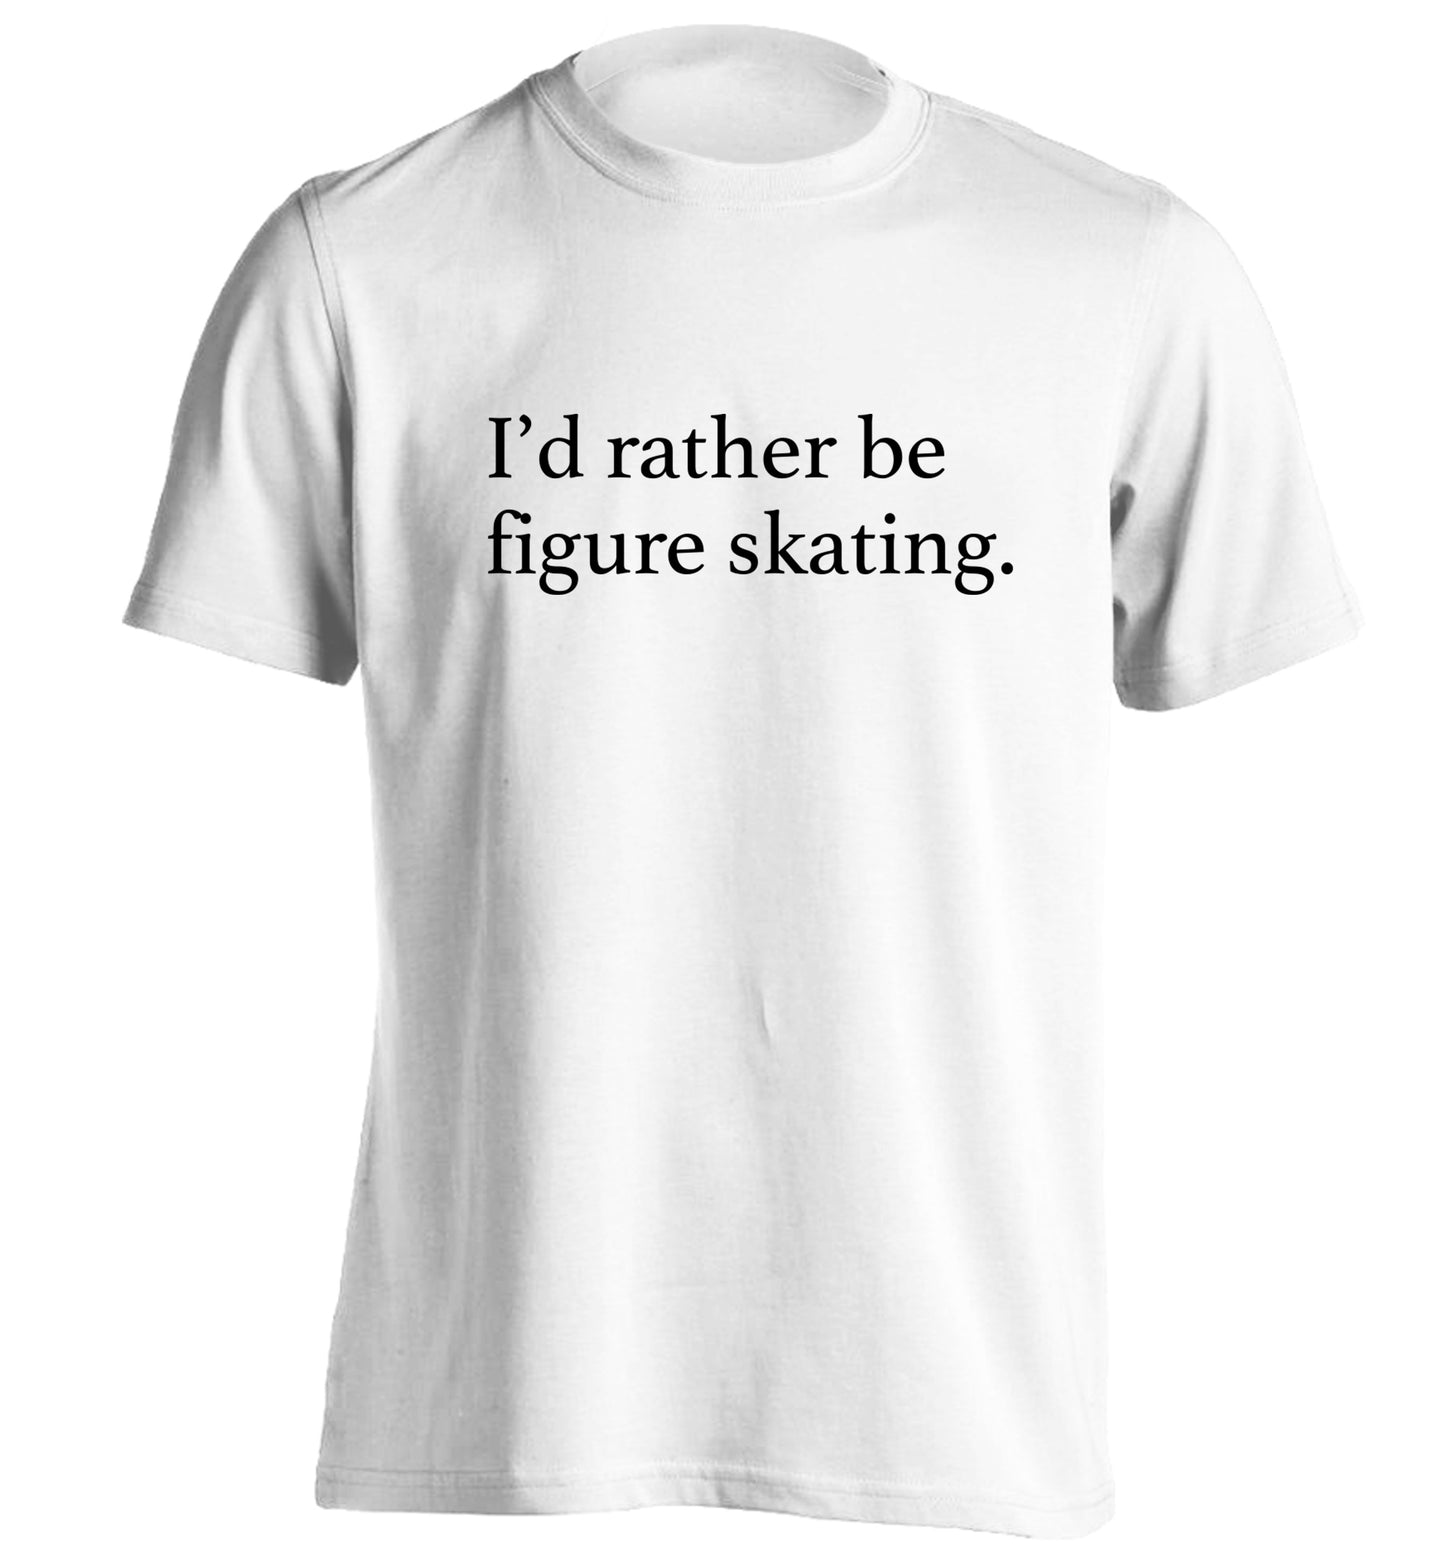 I'd rather be figure skating adults unisexwhite Tshirt 2XL